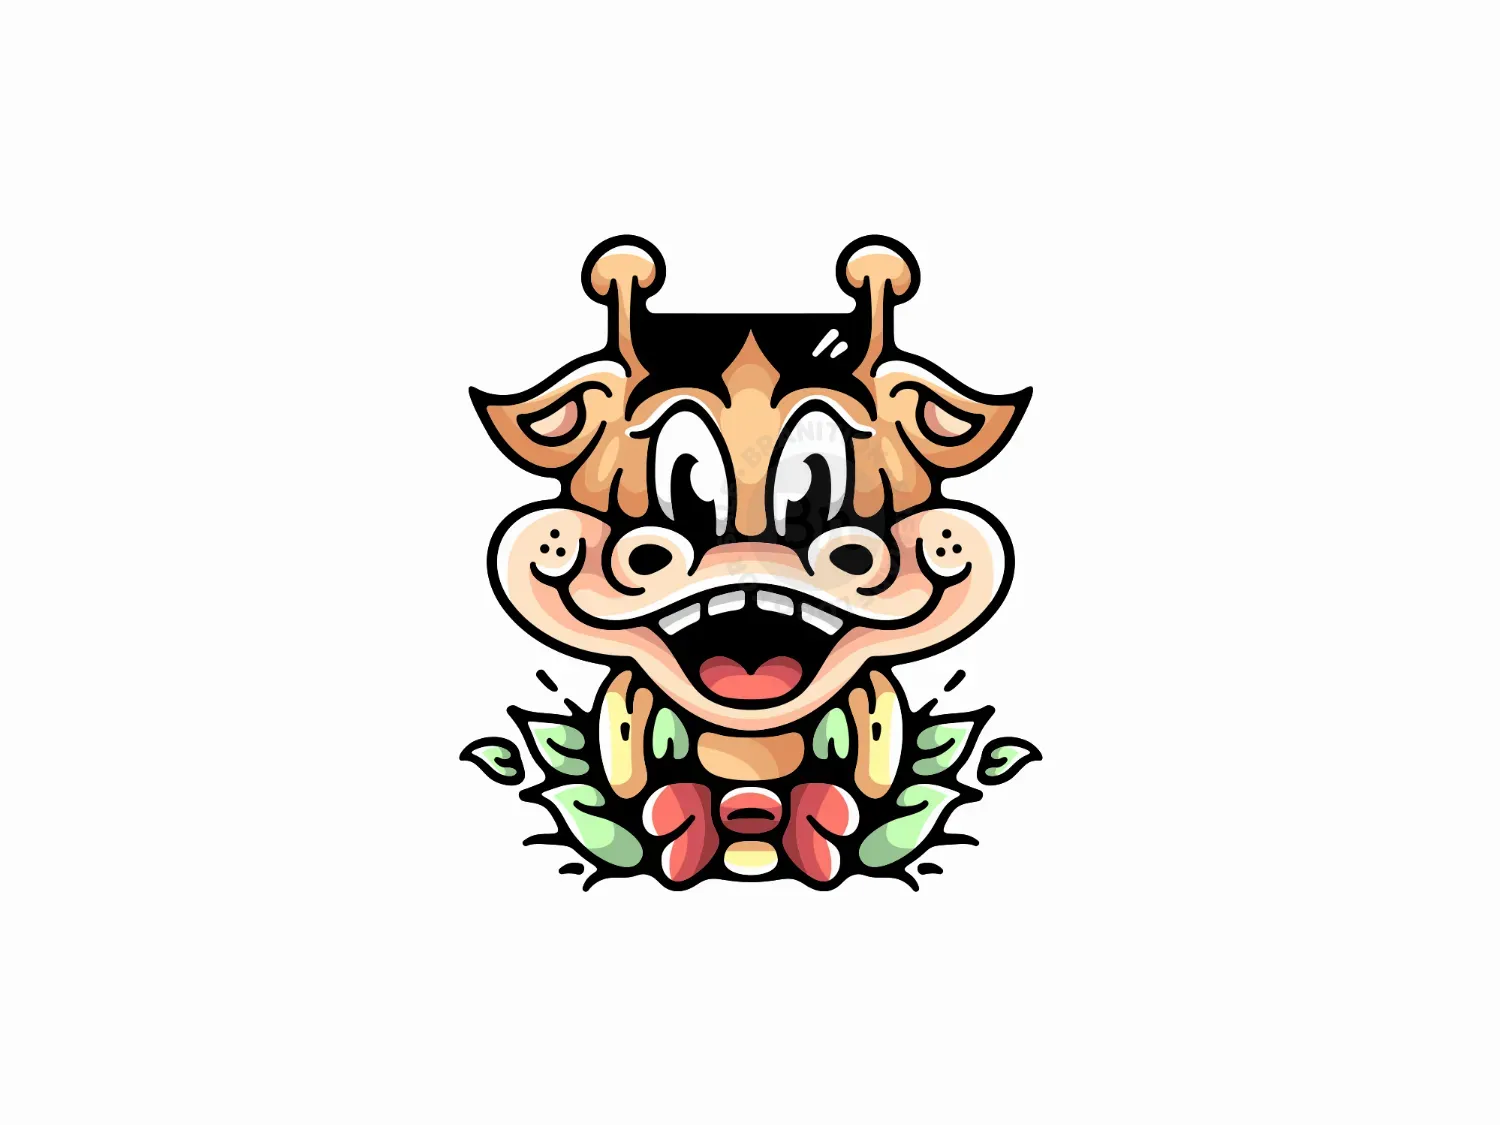 Giraffe Smiling Mascot Logo